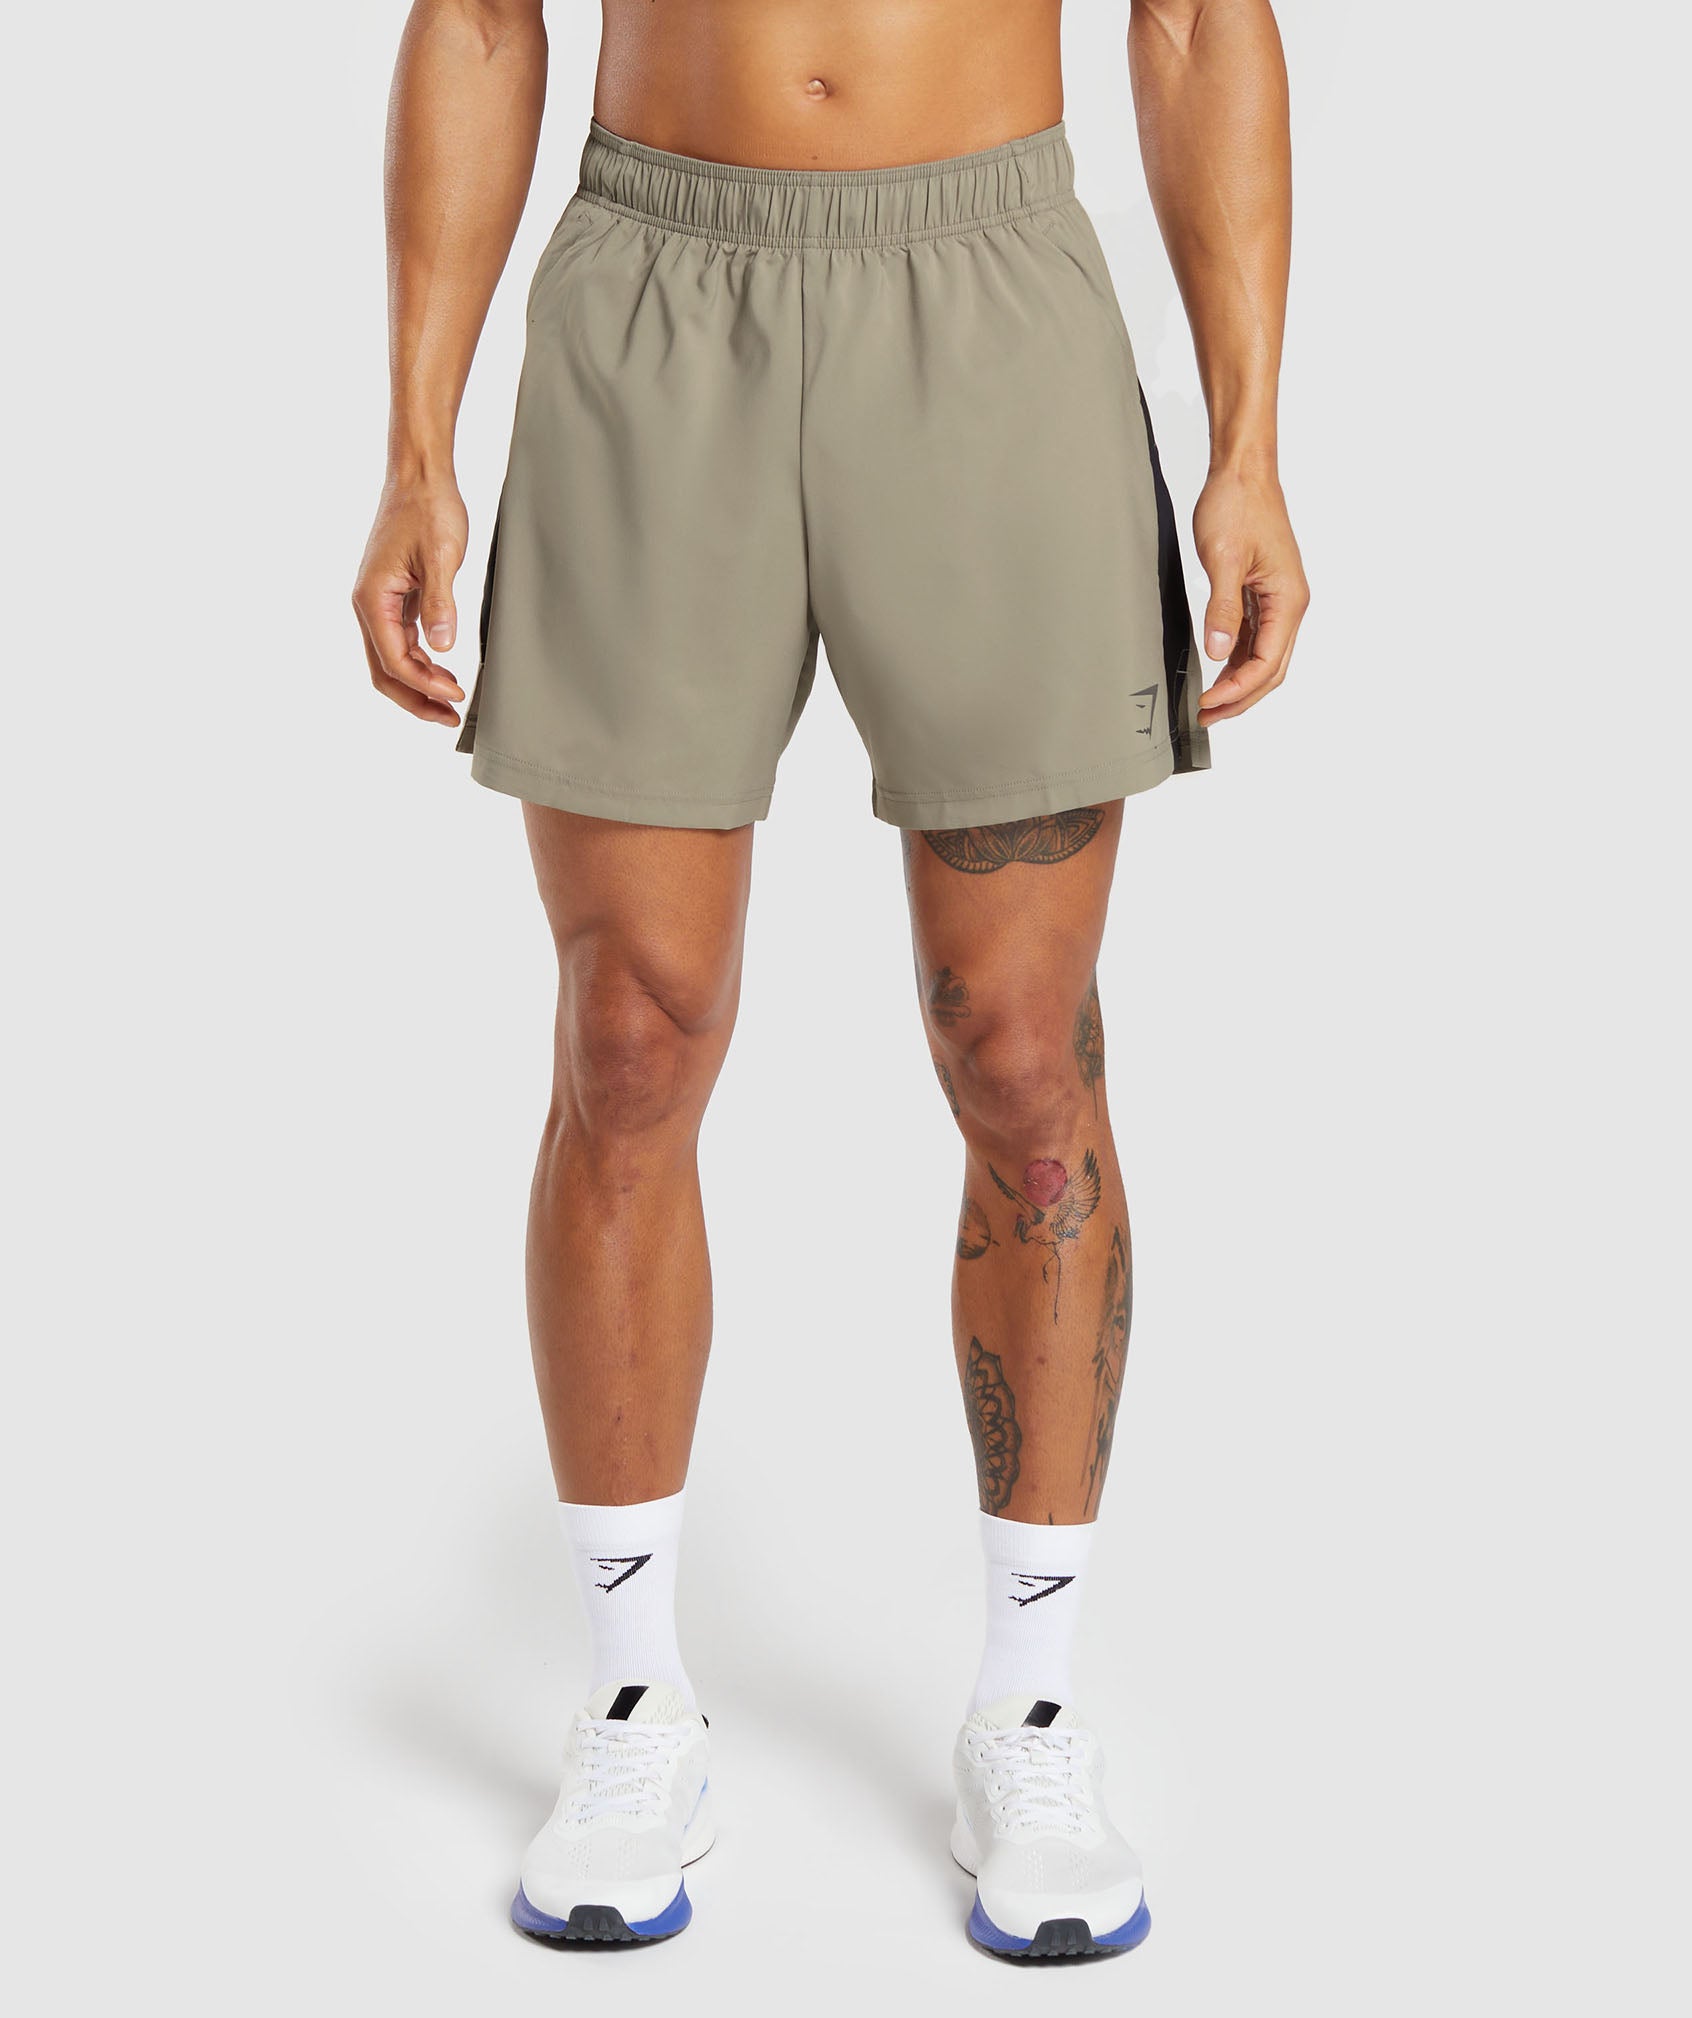 Men's Sport Clothing Collection - Gymshark